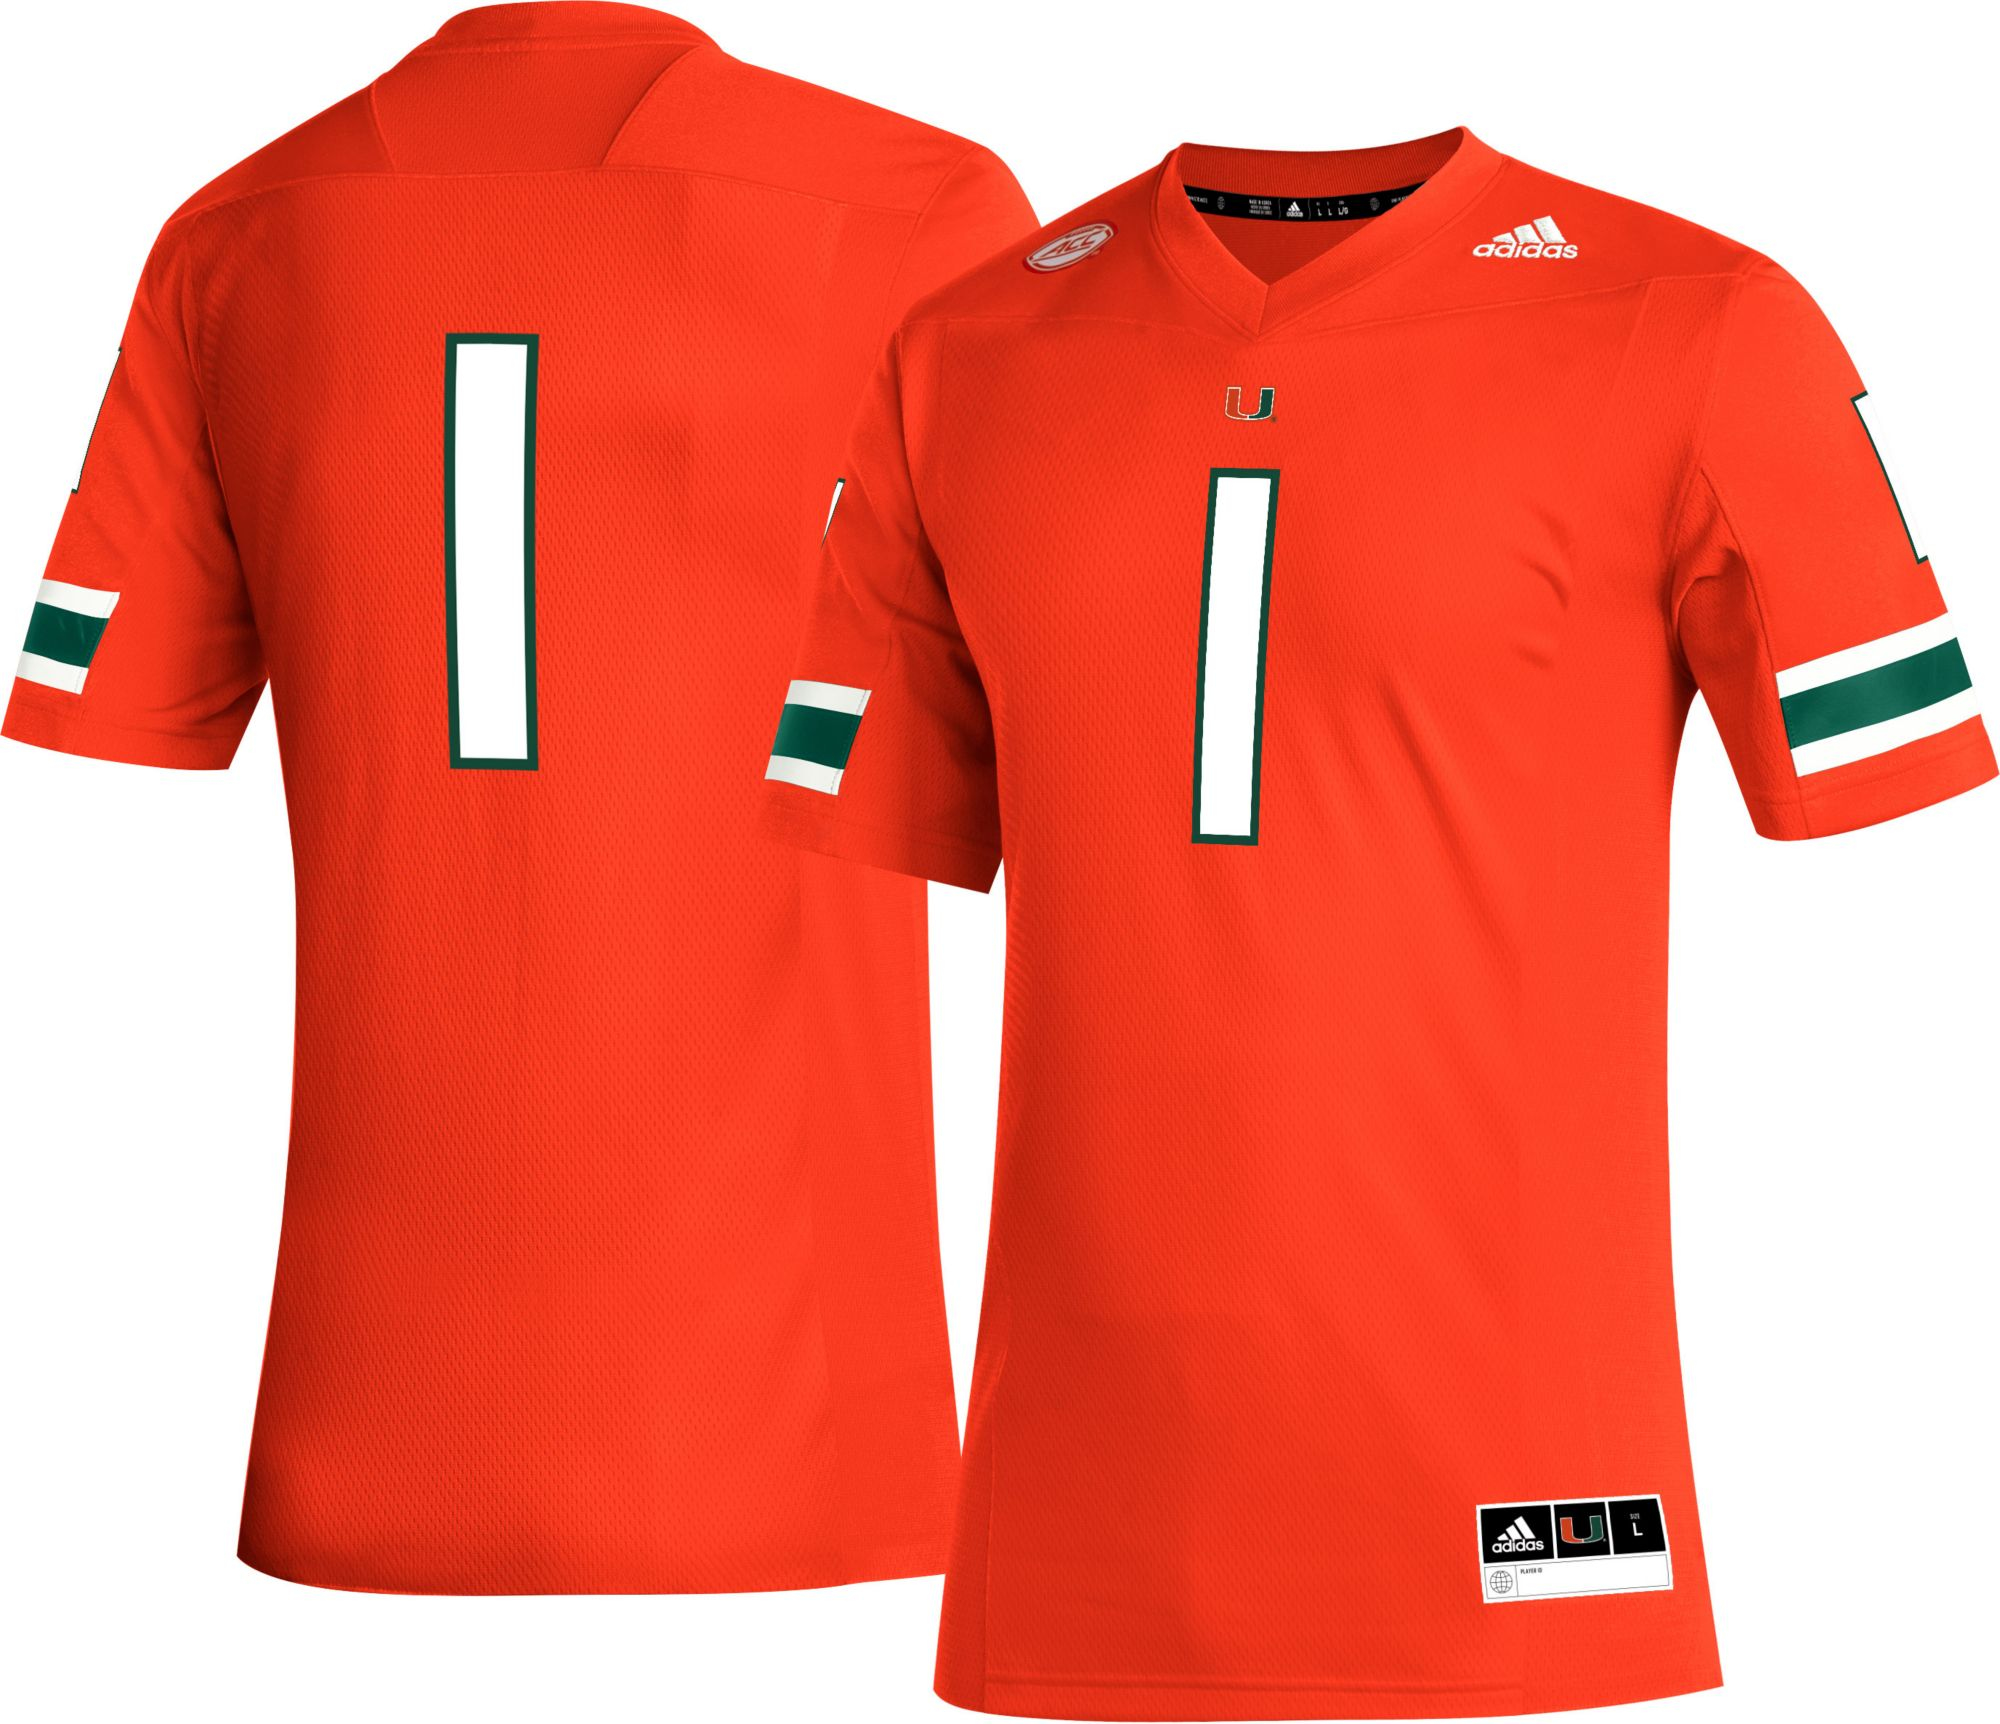 adidas Men's Miami Hurricanes #8 Cardinal Red Replica Football Jersey, XXL, Orange